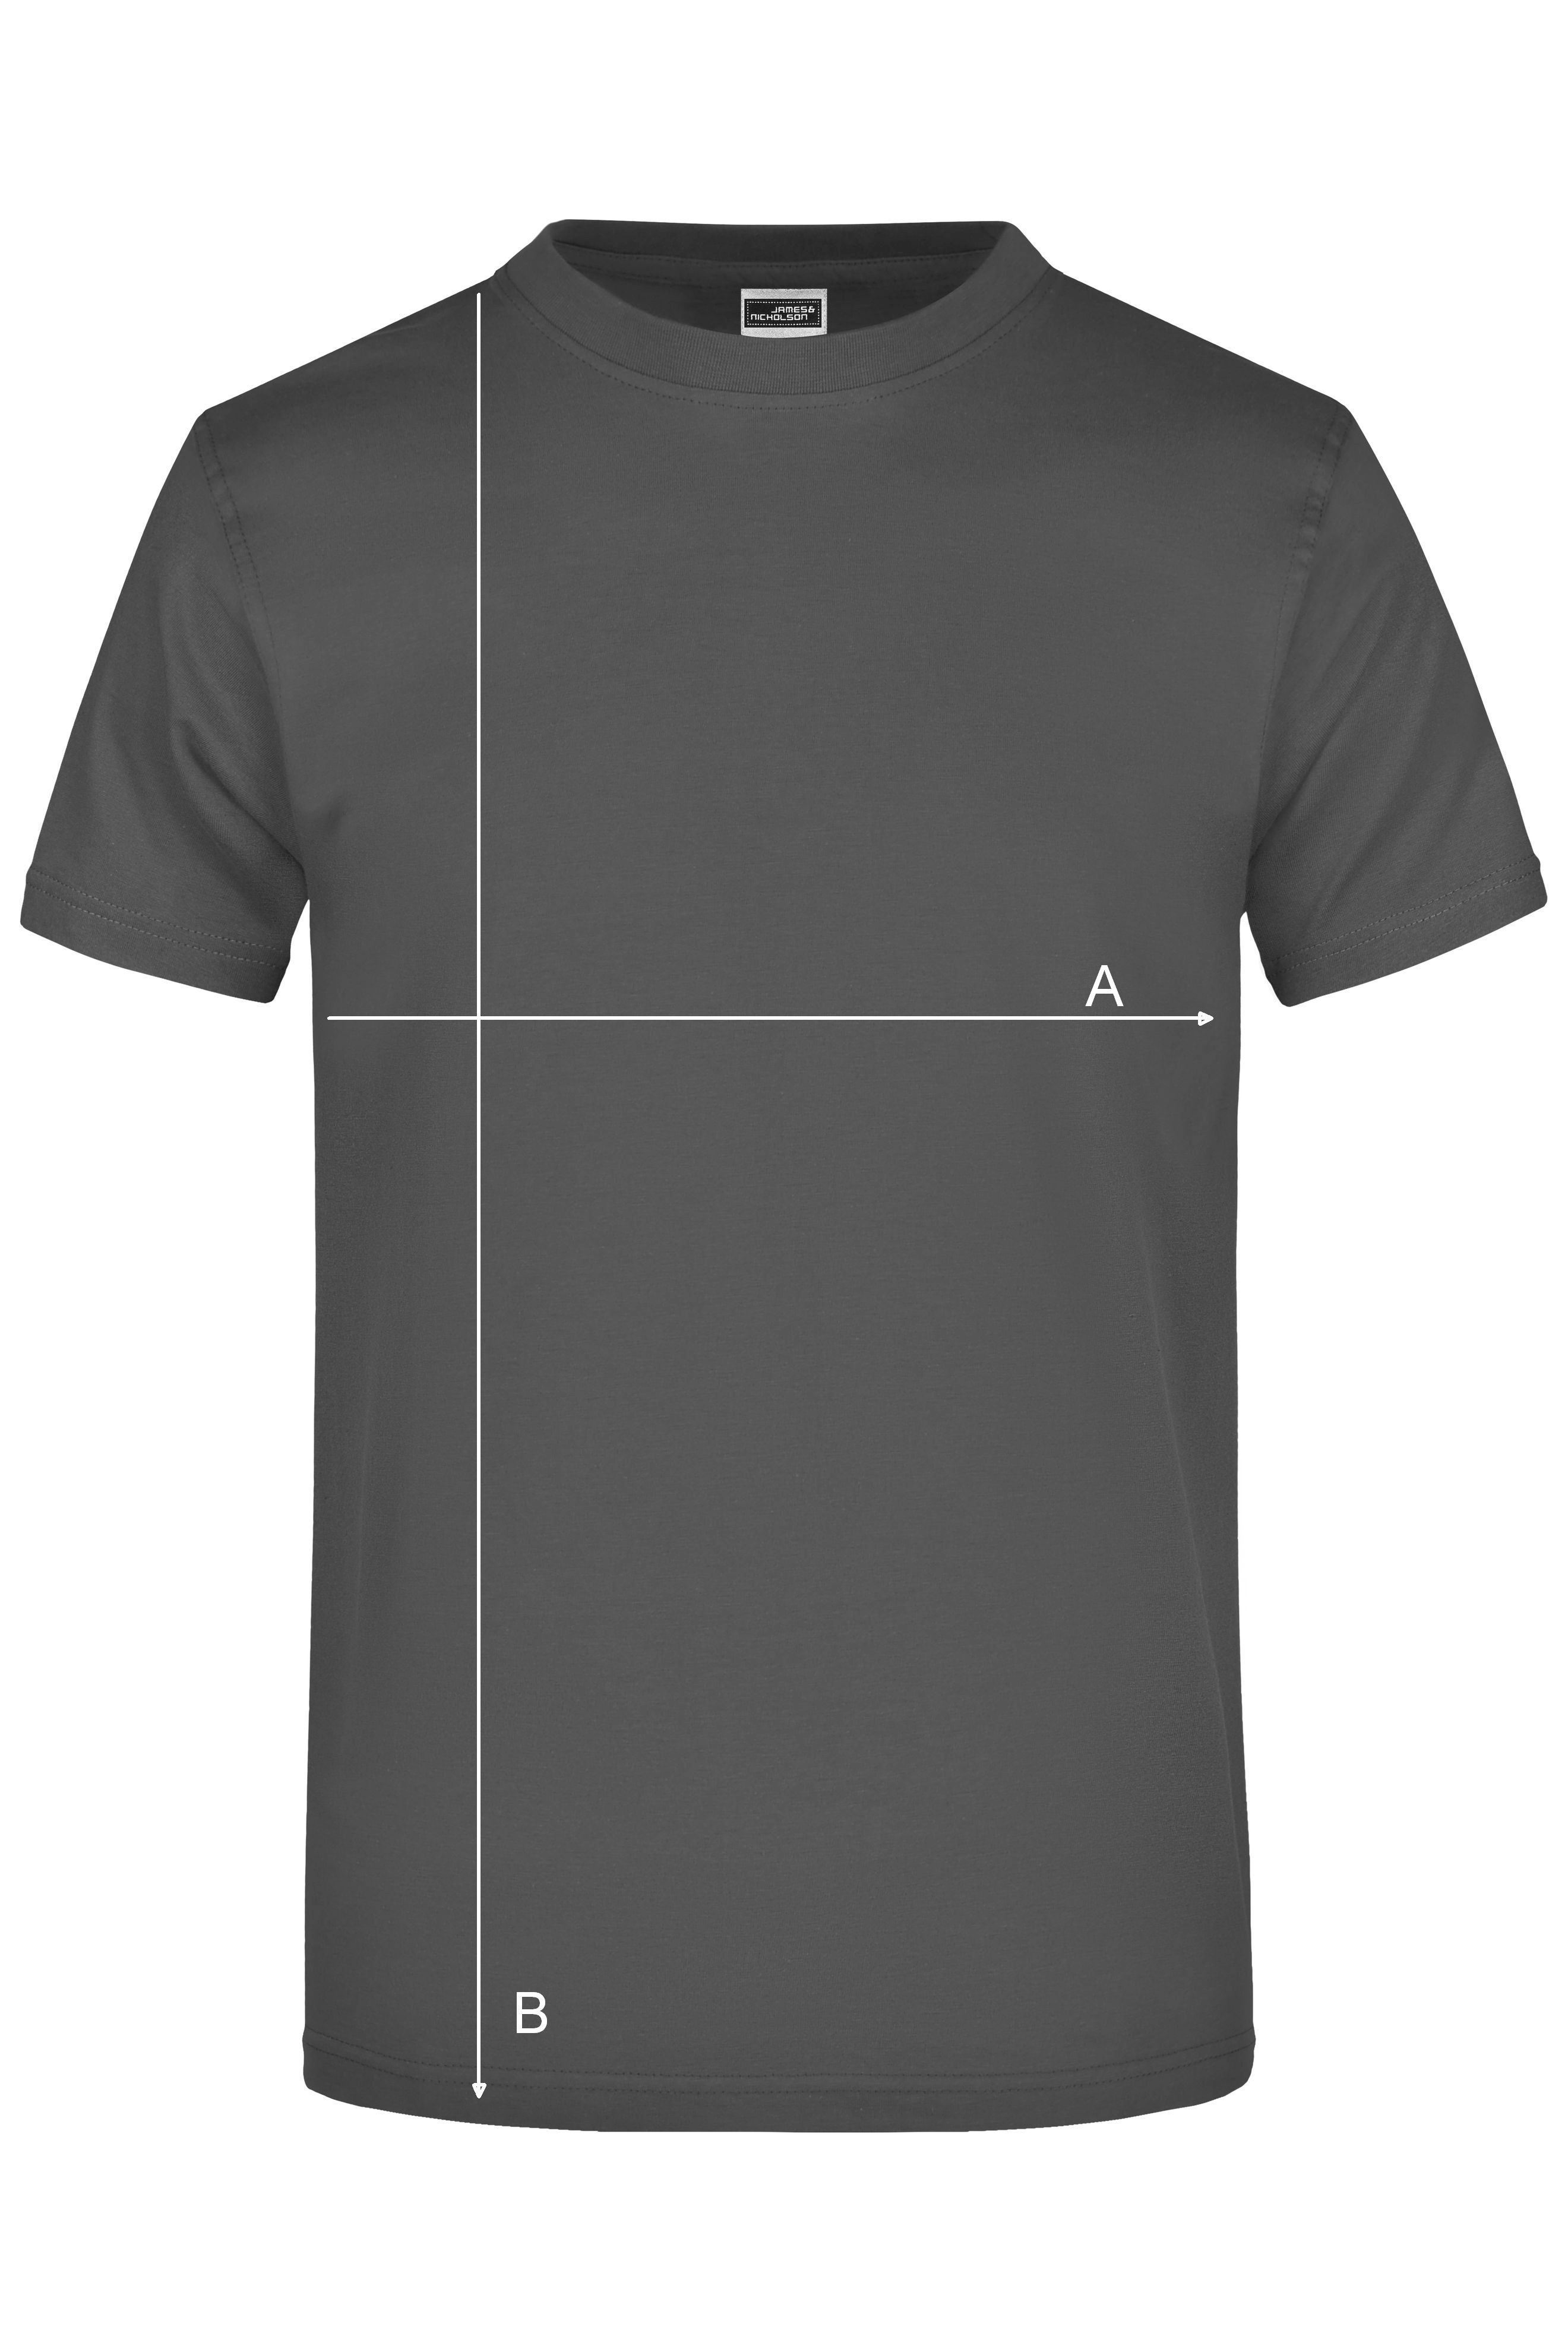 T-Shirt graphite